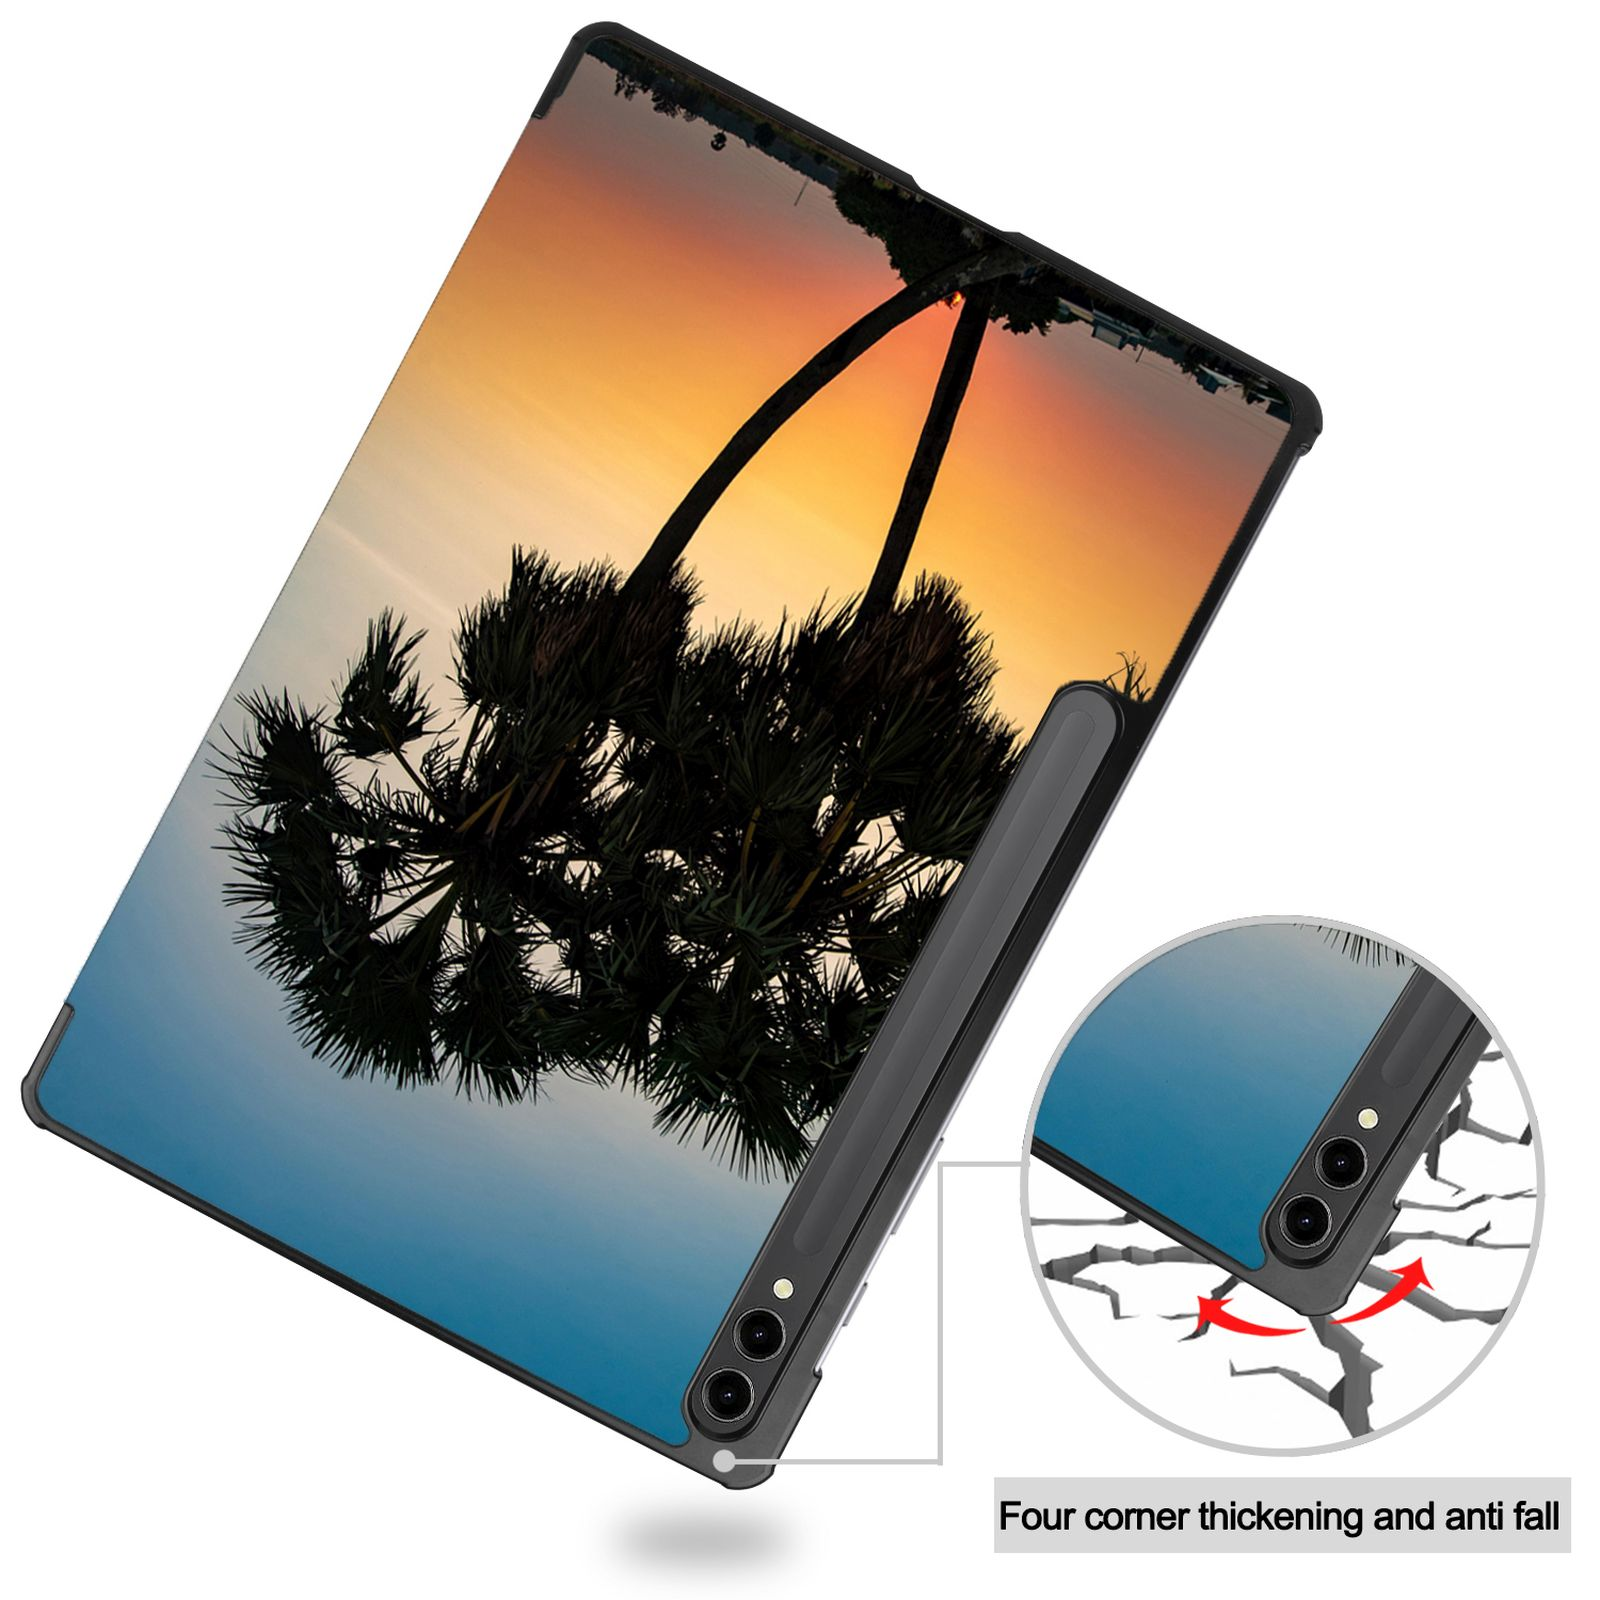 LOBWERK Hülle Schutzhülle Samsung Zoll 14.6 Mehrfarbig Tab SM-916B Ultra für Galaxy S9 Bookcover Kunstleder, SM-X910